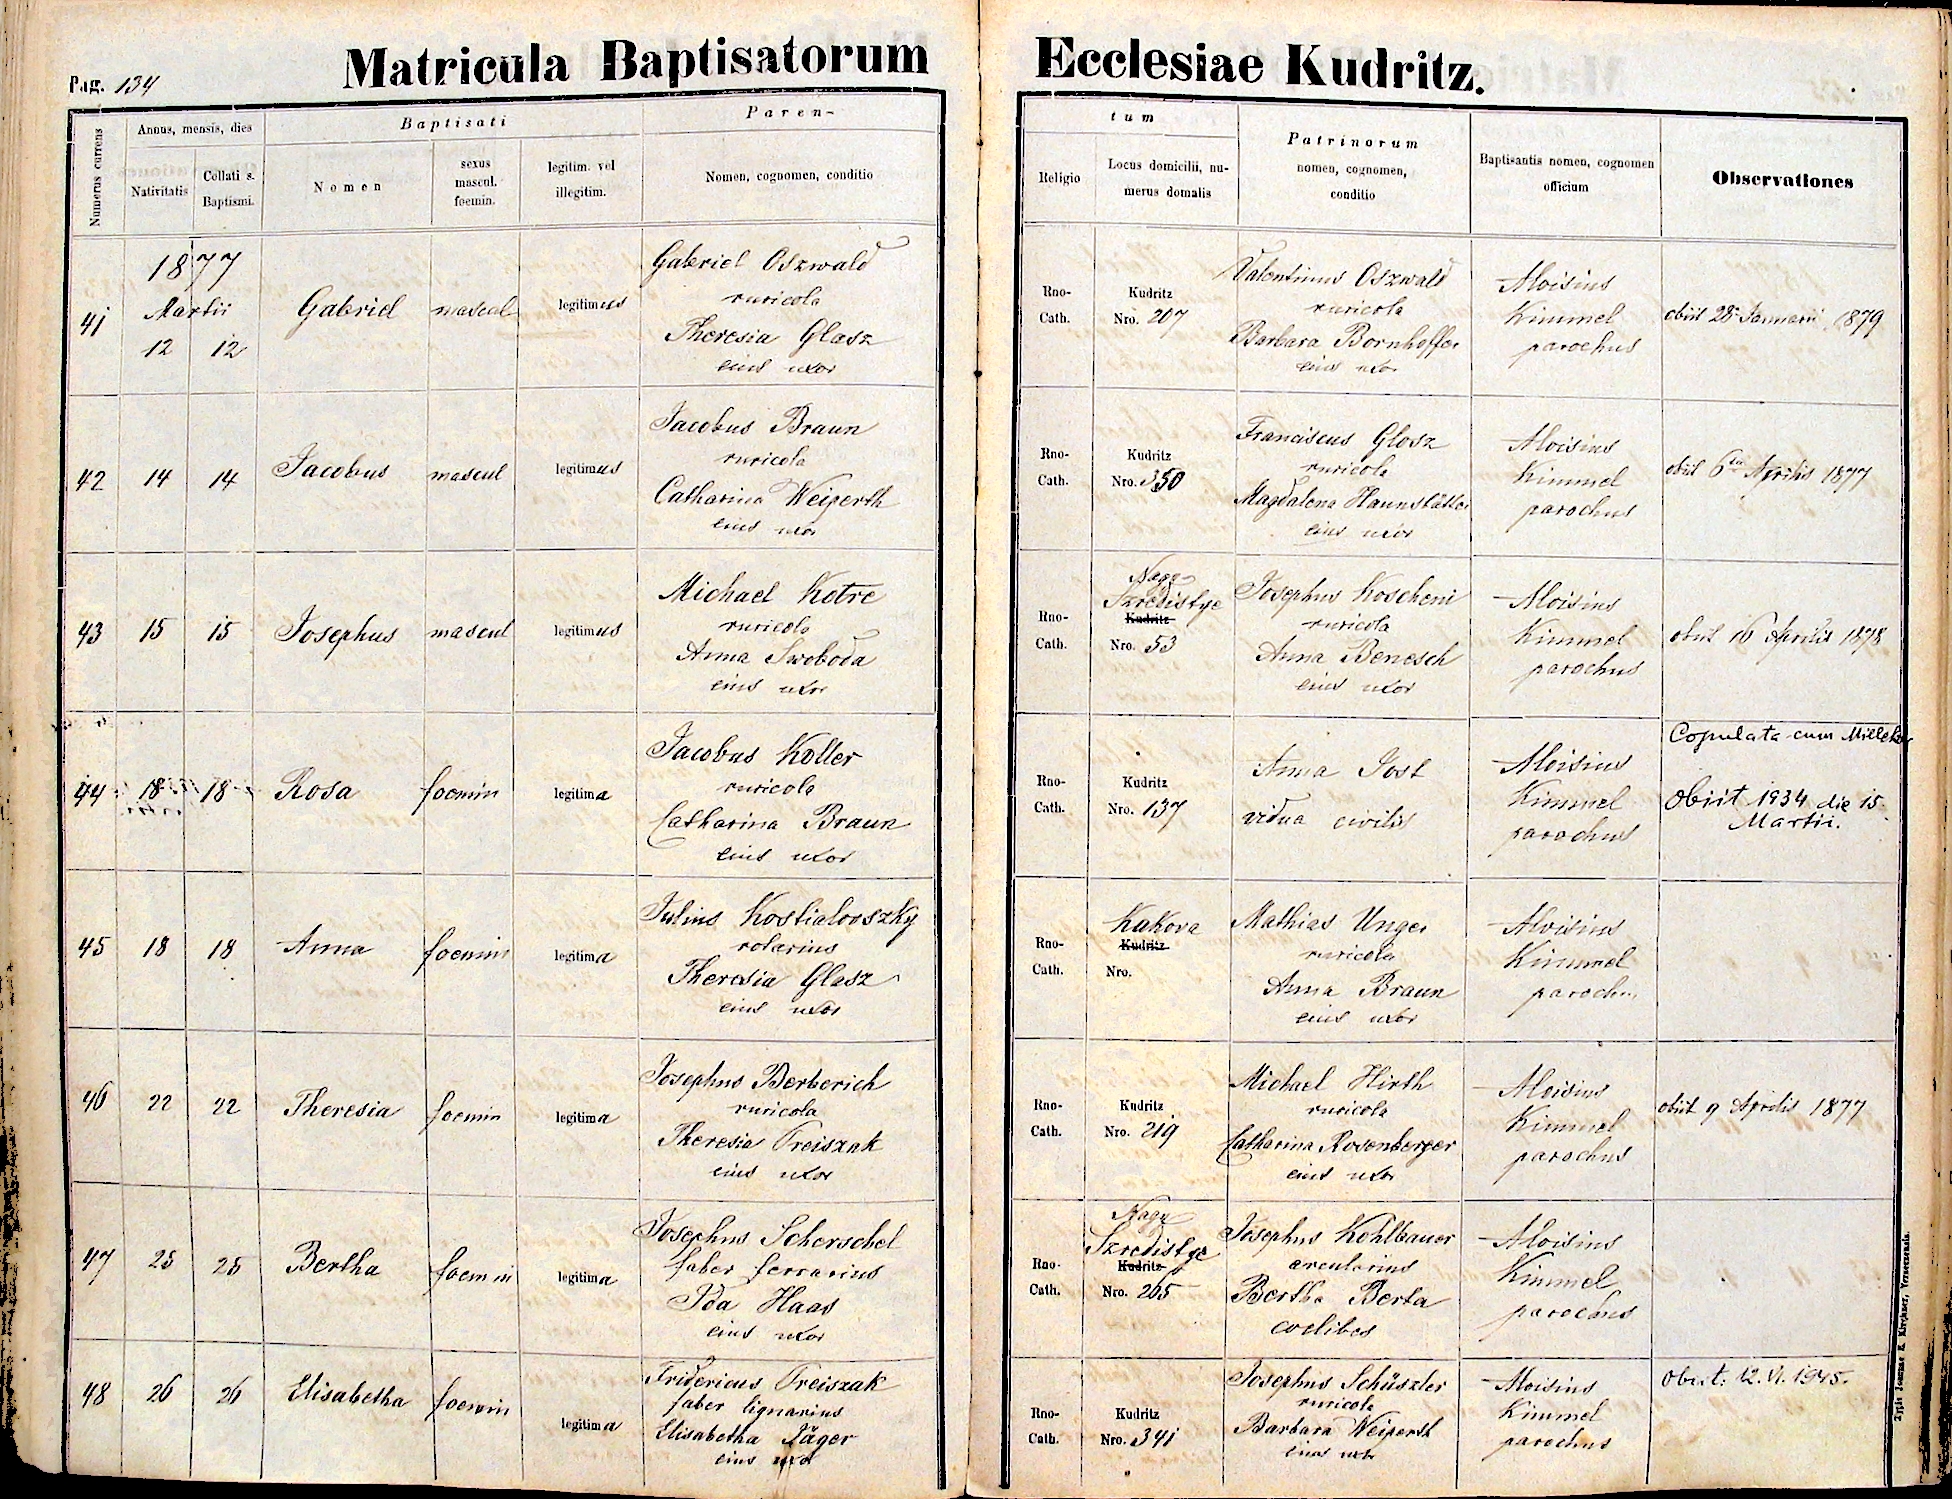 images/church_records/BIRTHS/1870-1879B/1876/134